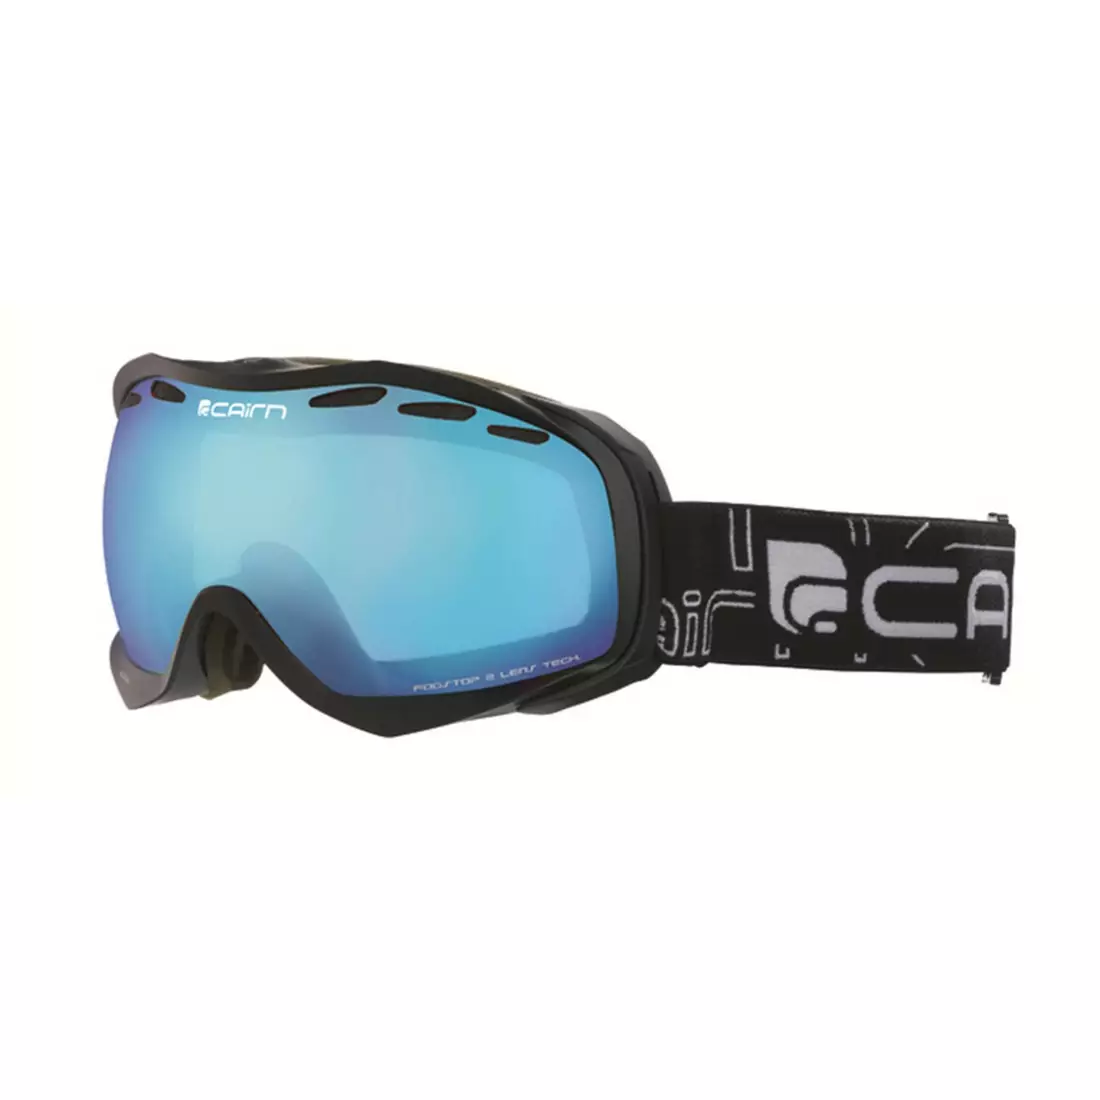 CAIRN ochelari de schi/snowboard ALPHA SPX3000 8202, black/blue 5808518202